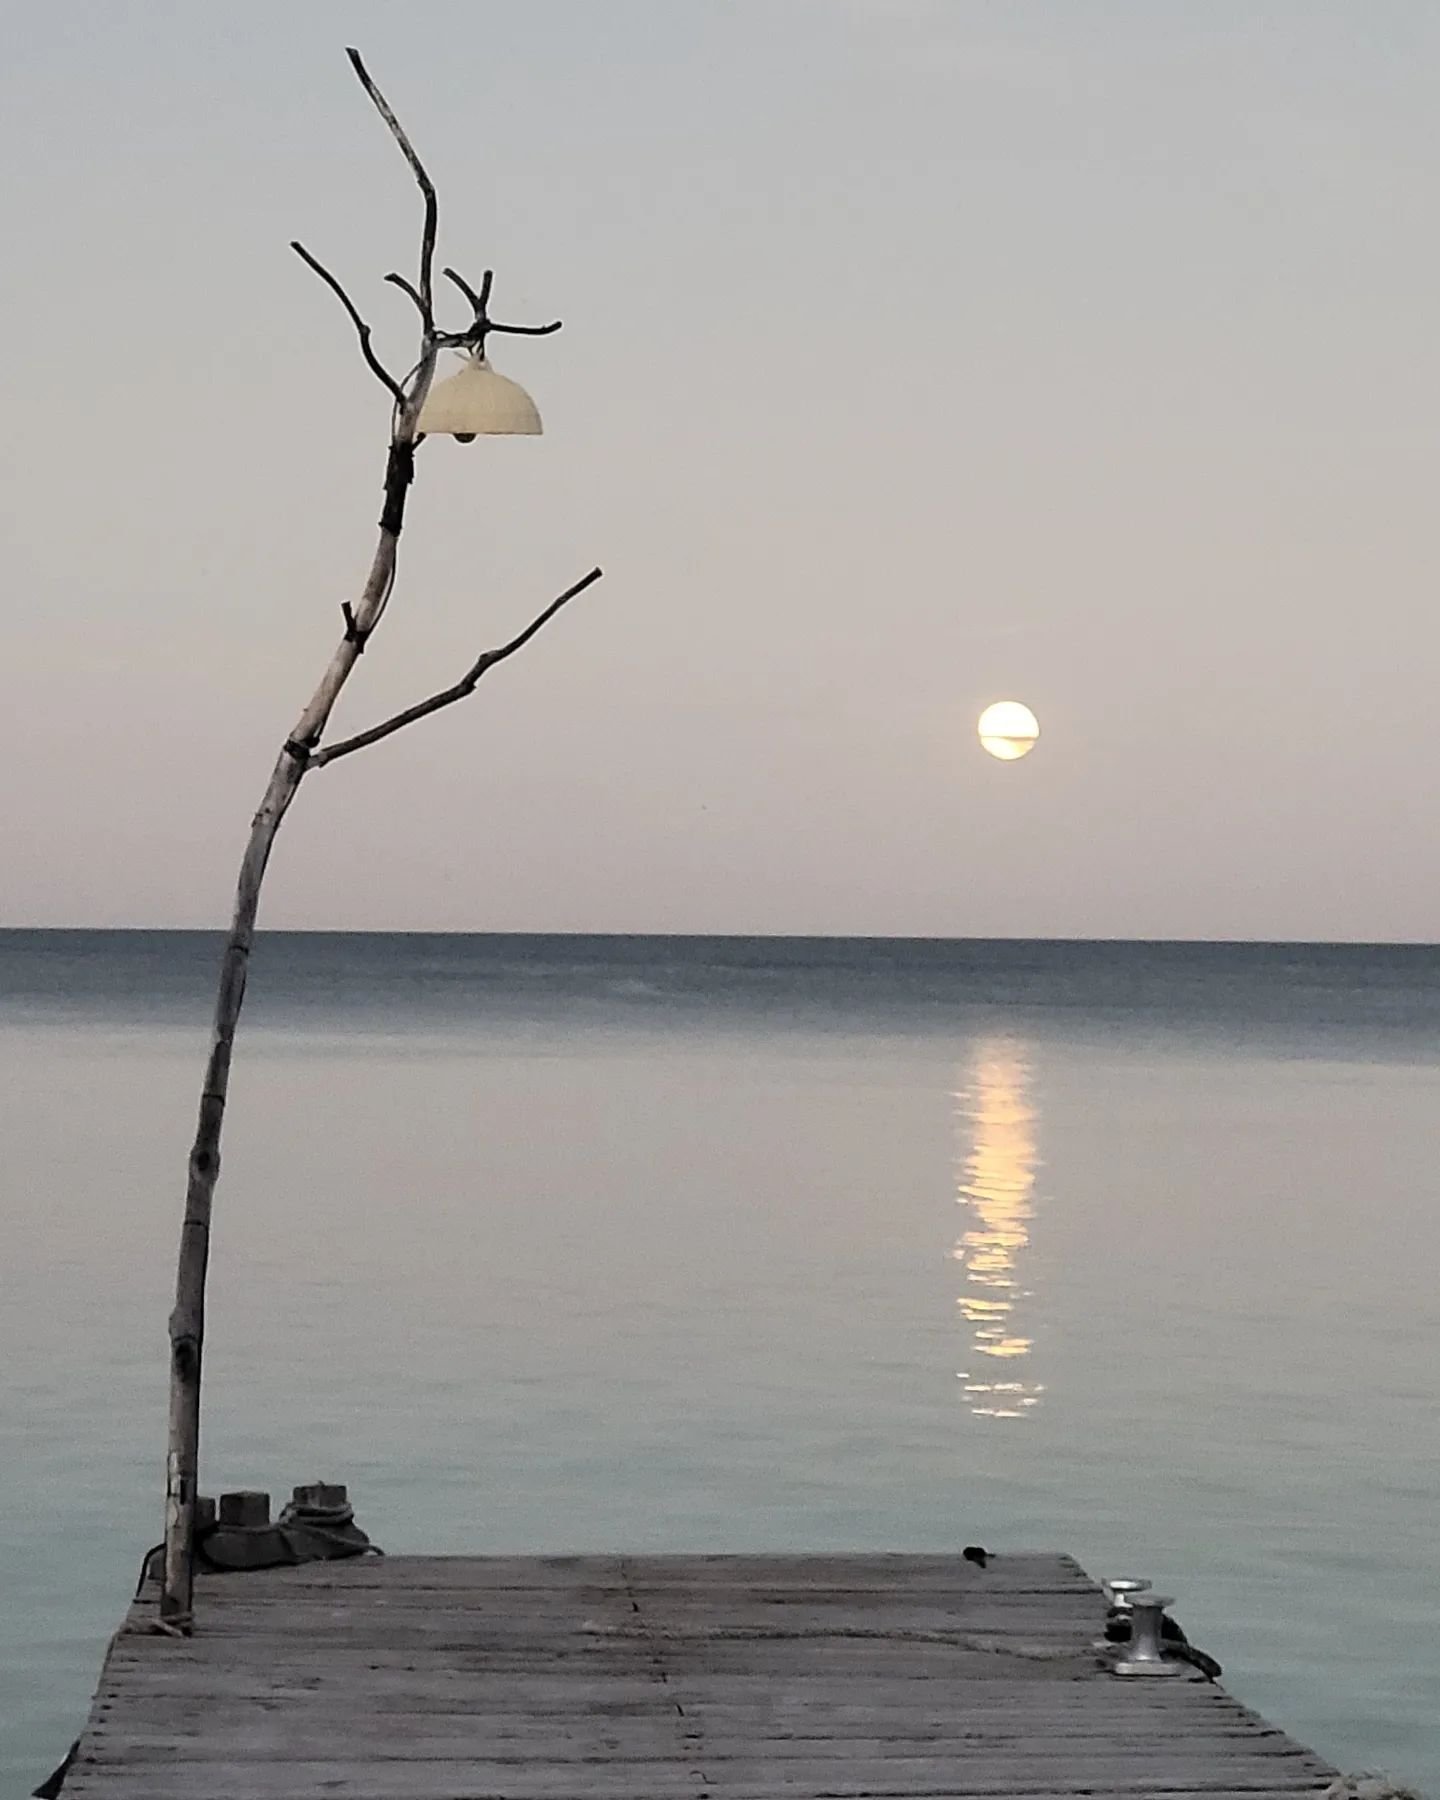 La lune s'endort...
#moonset #morningmotivation #goodvibes #fakarava #'tuamotu #'frenchpolynesia #raimiti